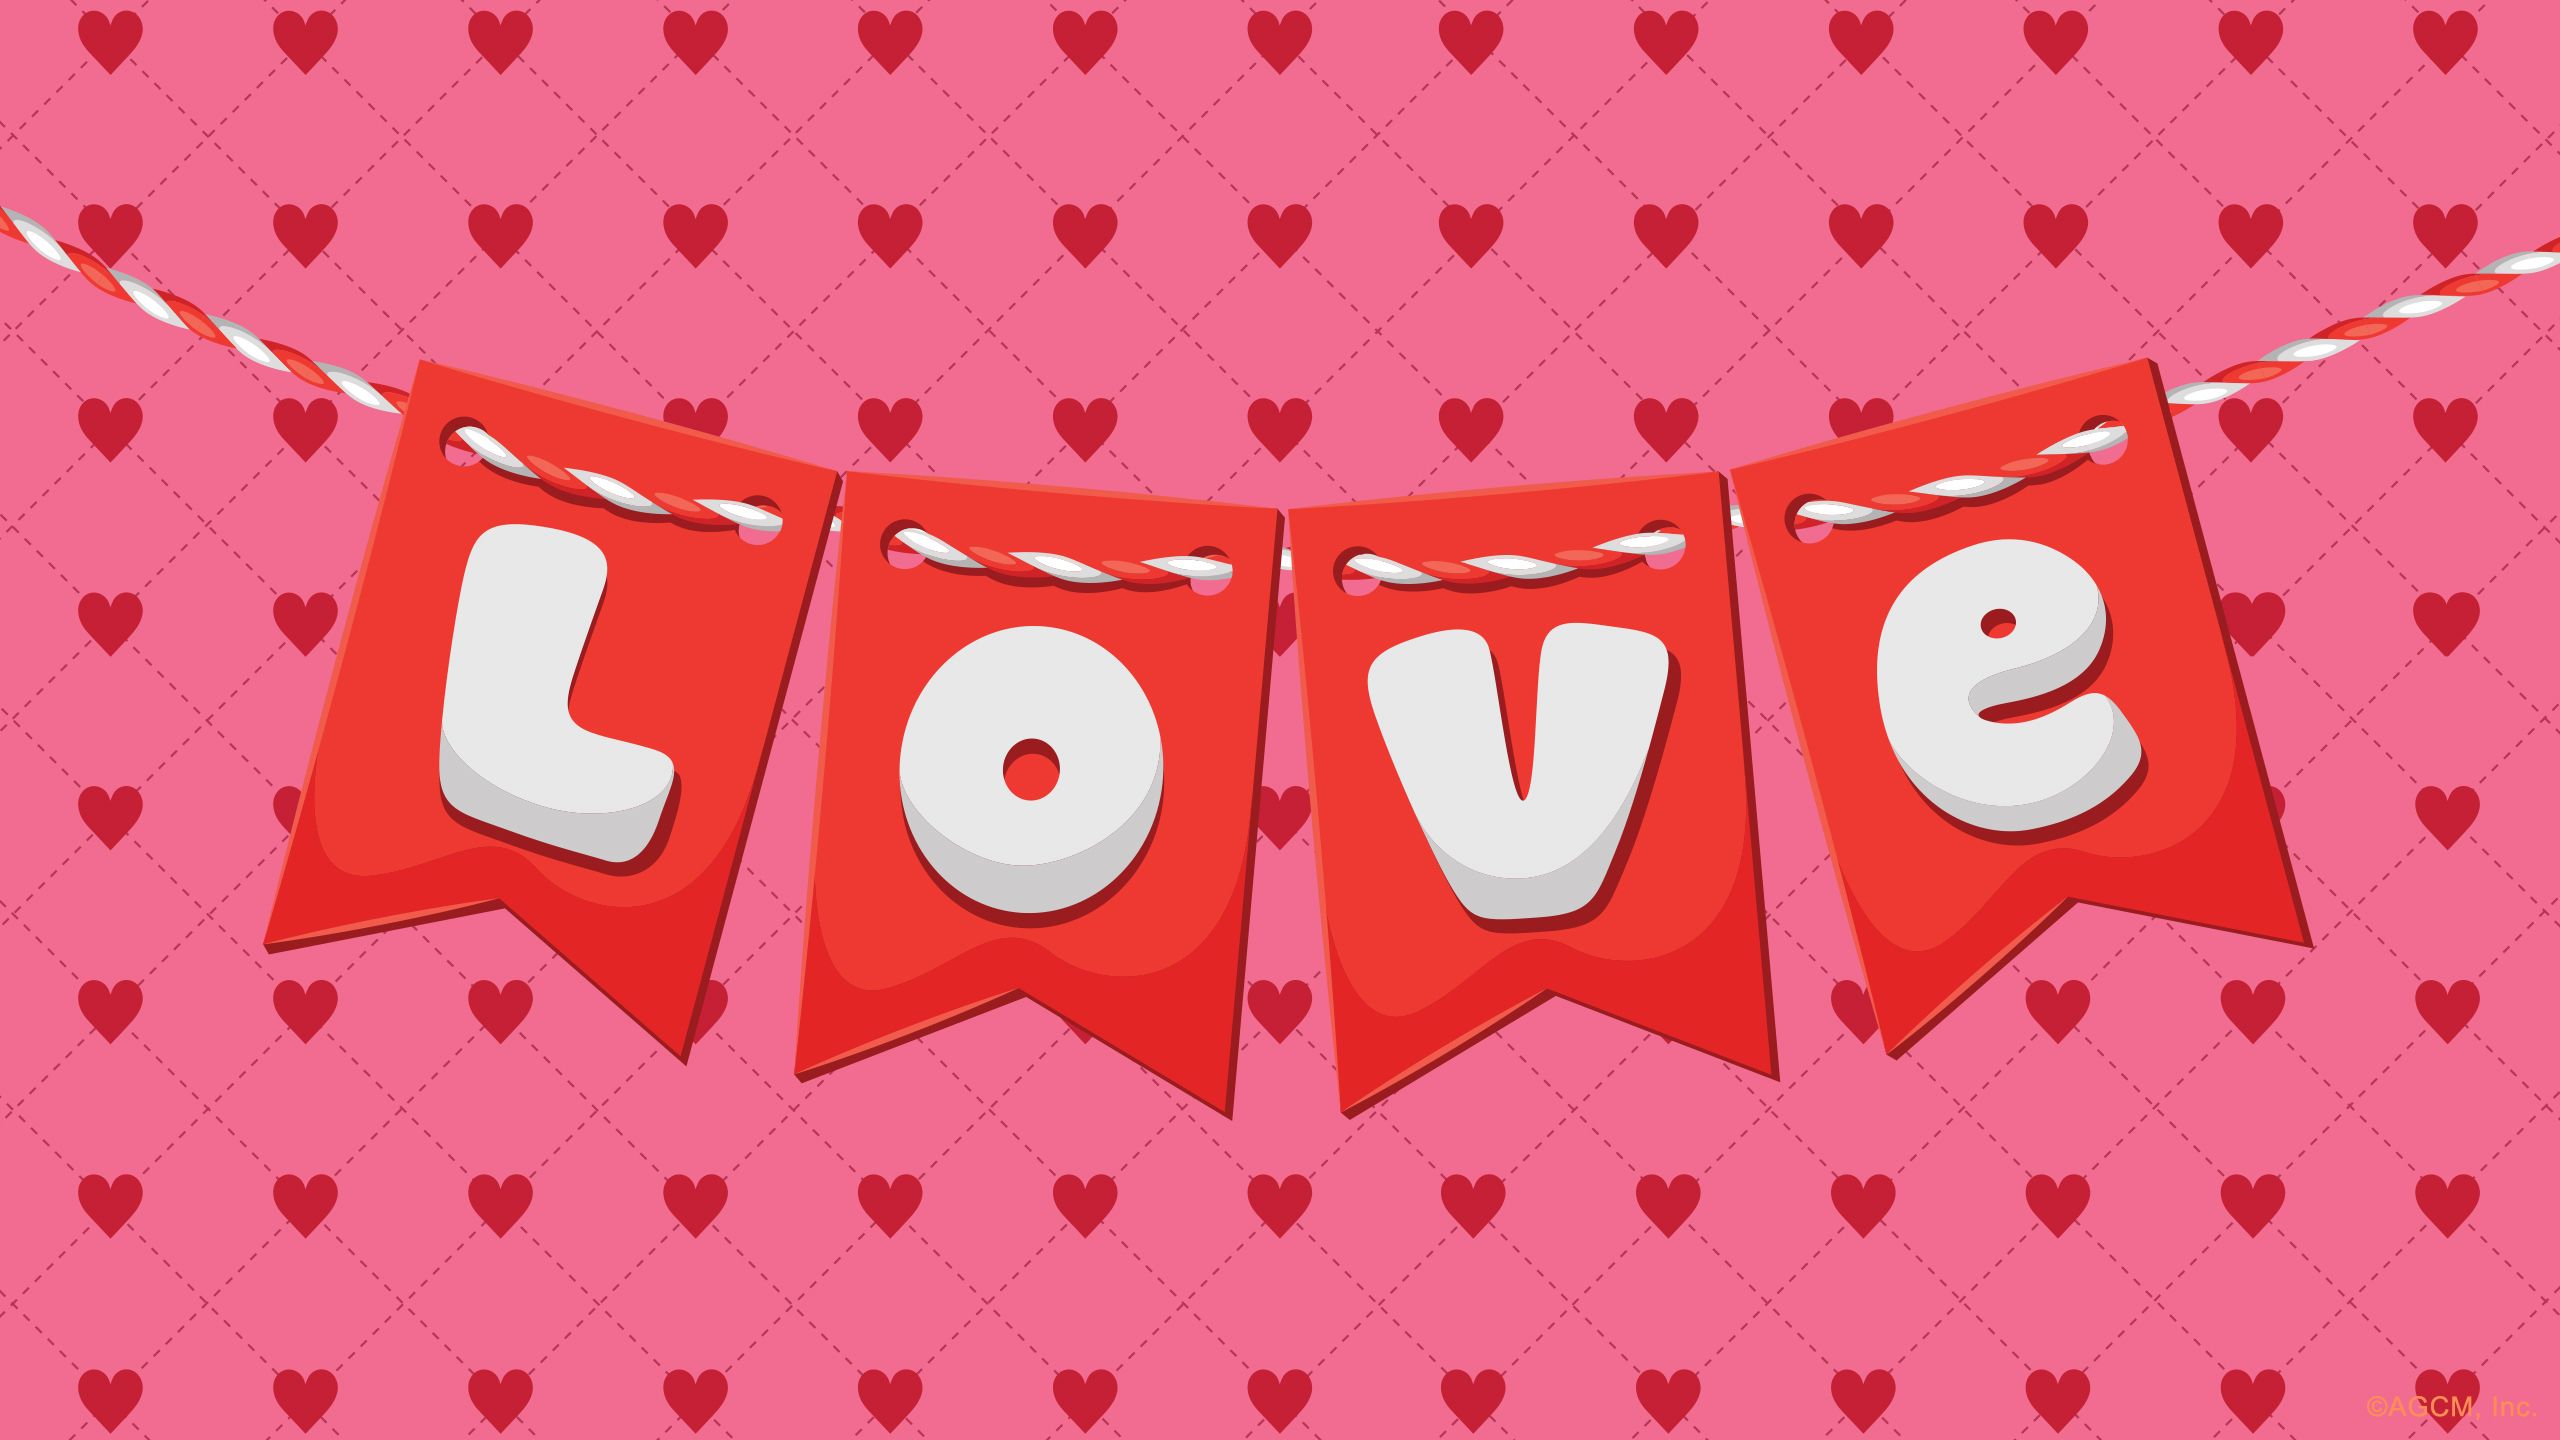 Free Valentine's Day Desktop Wallpaper Archives - American ...